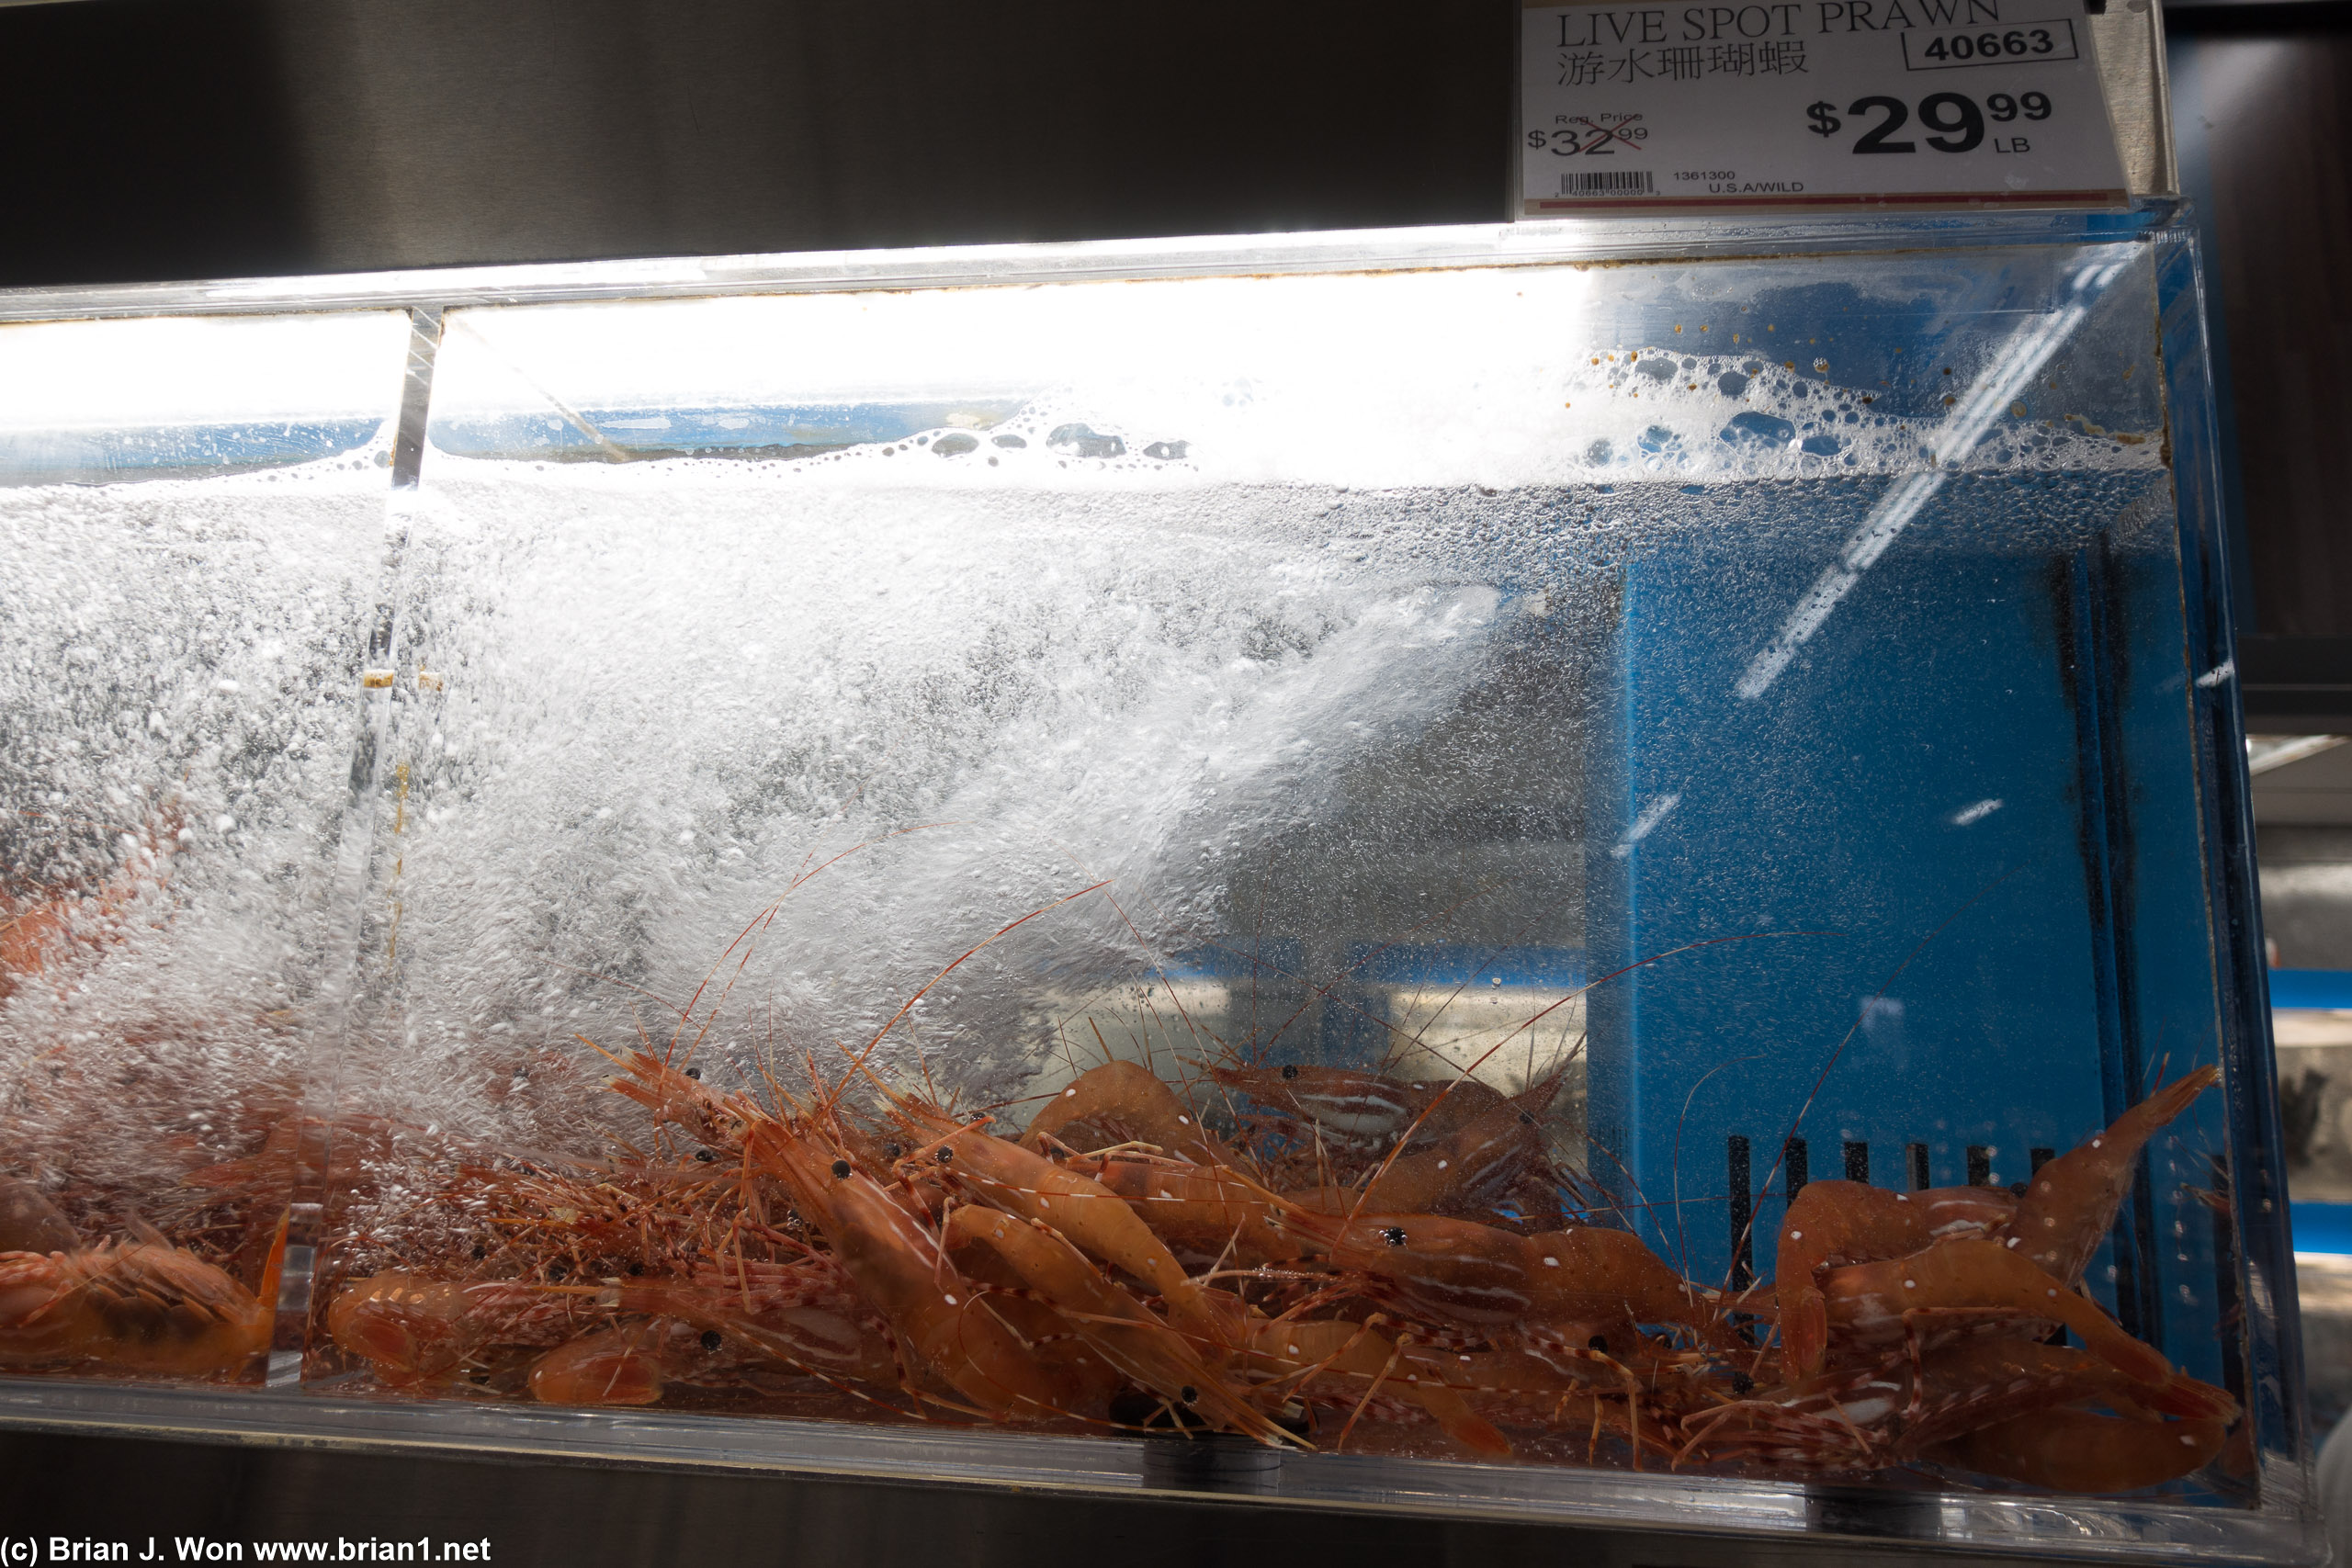 Spot prawns are still pricey.